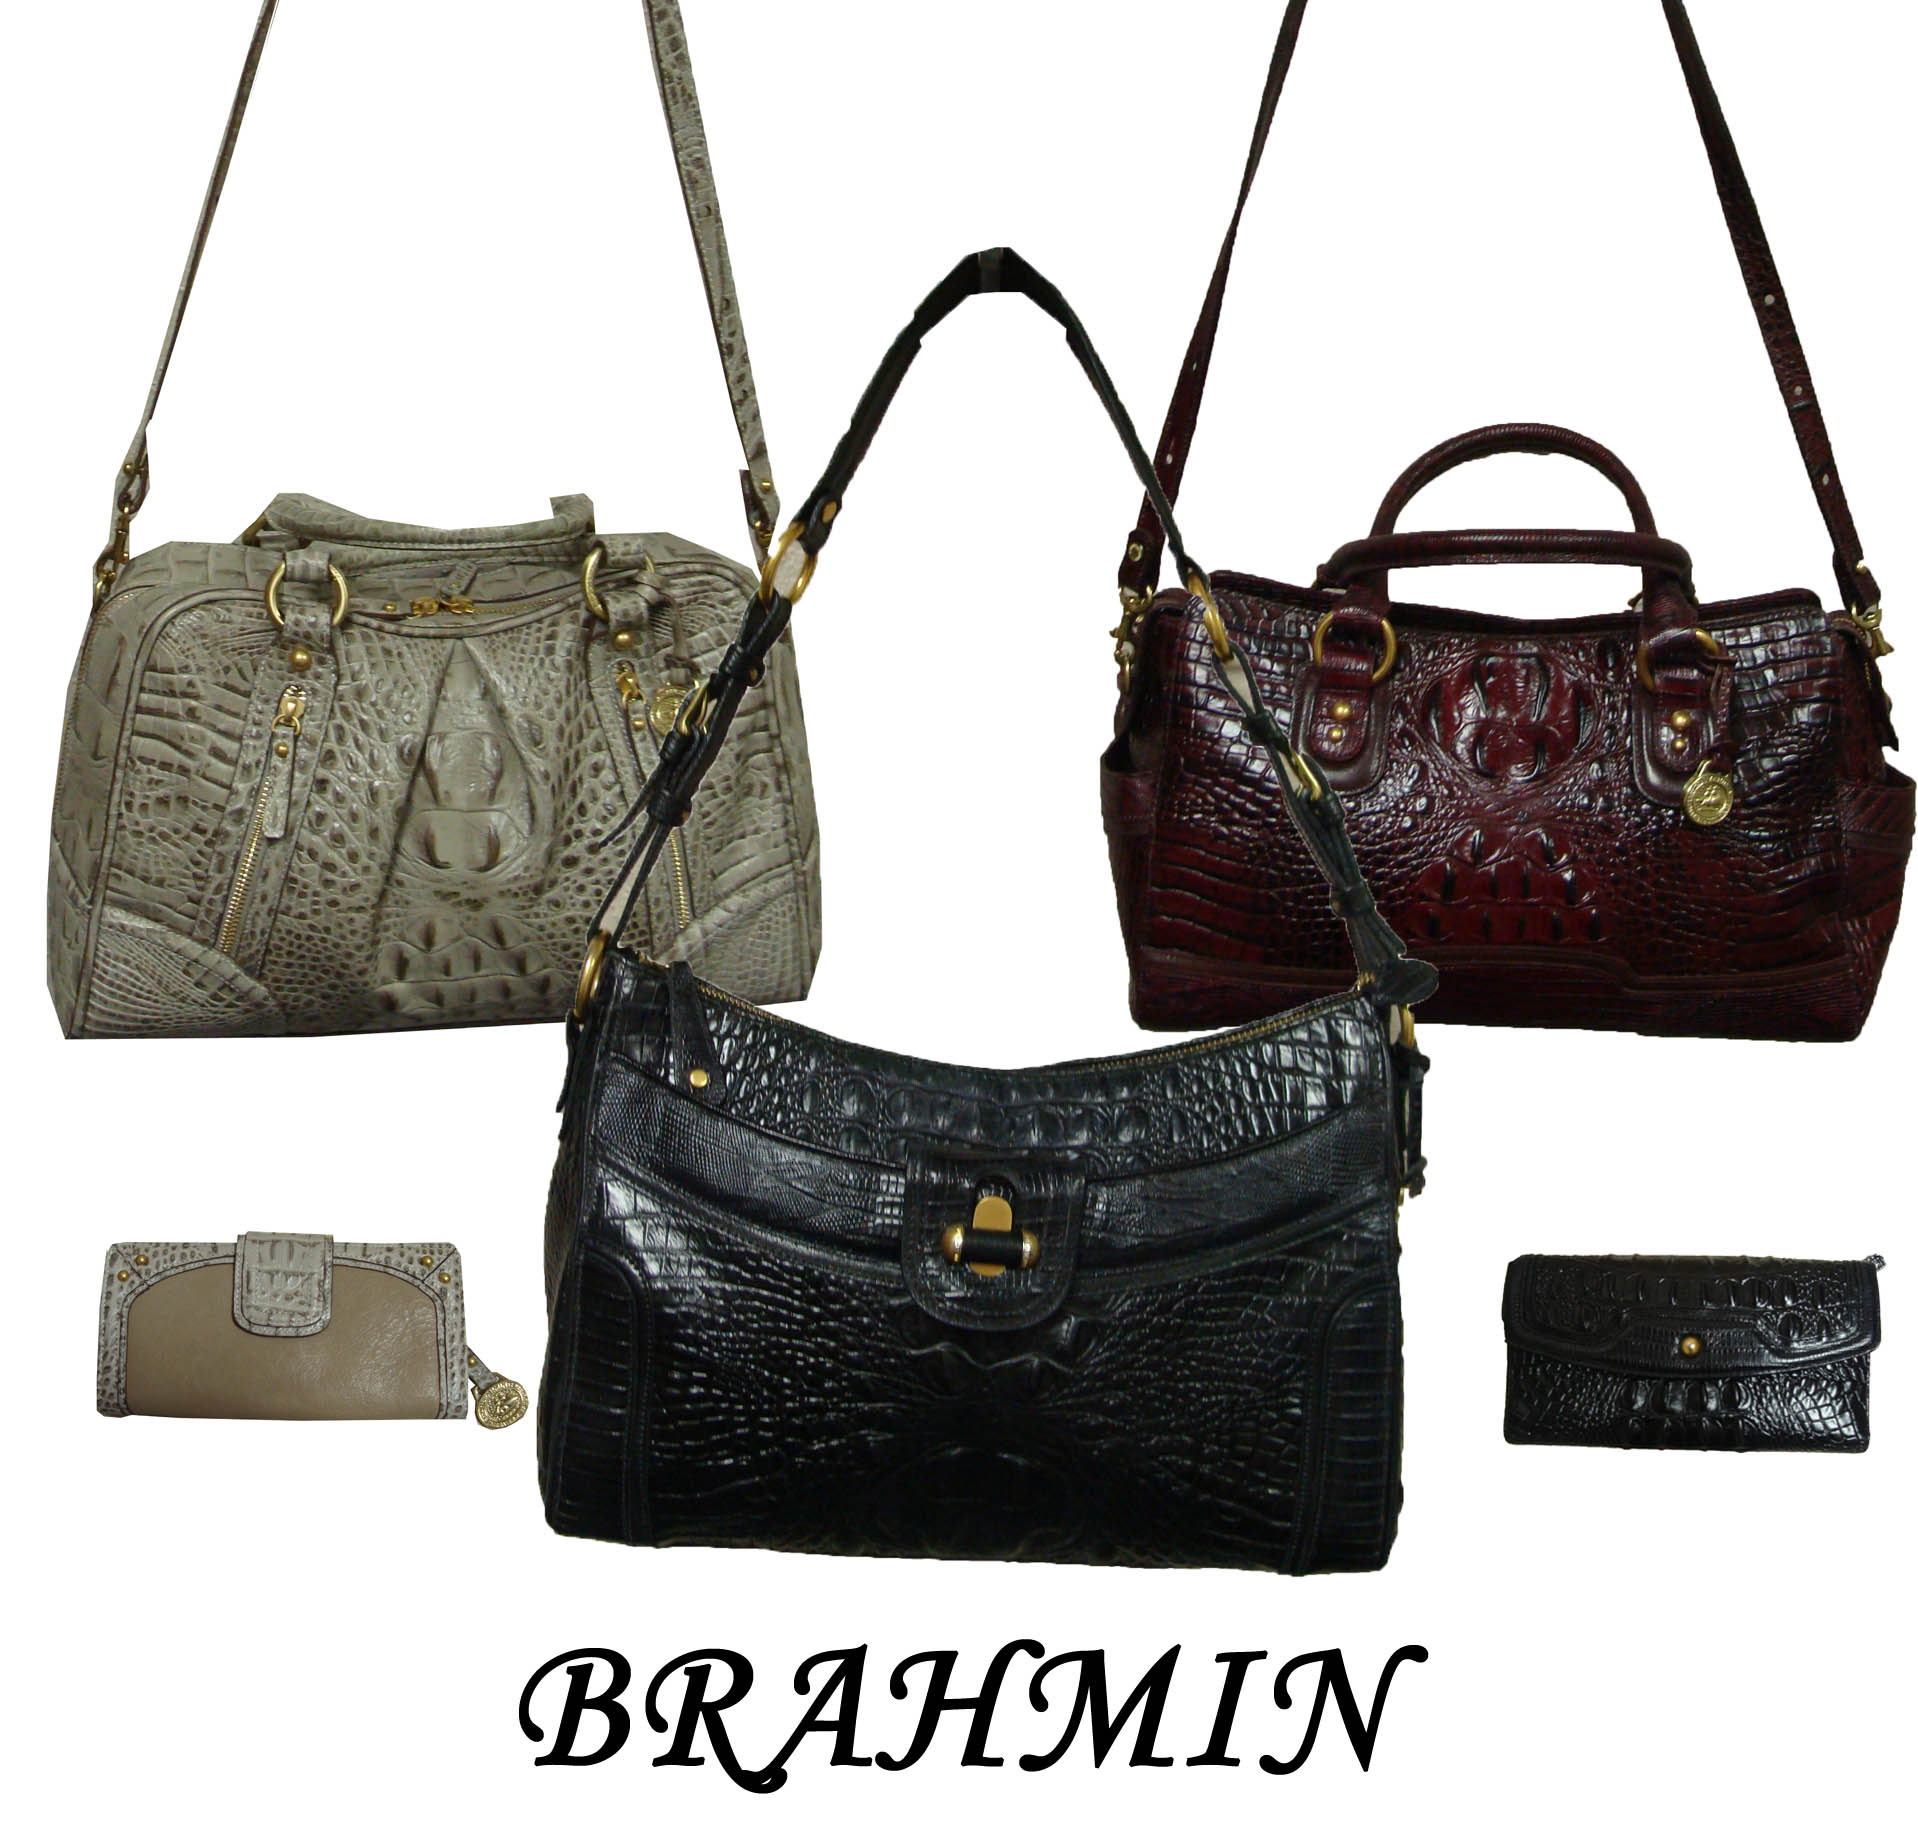 Brahmin, Bags, Crocodile Brahmin Bag